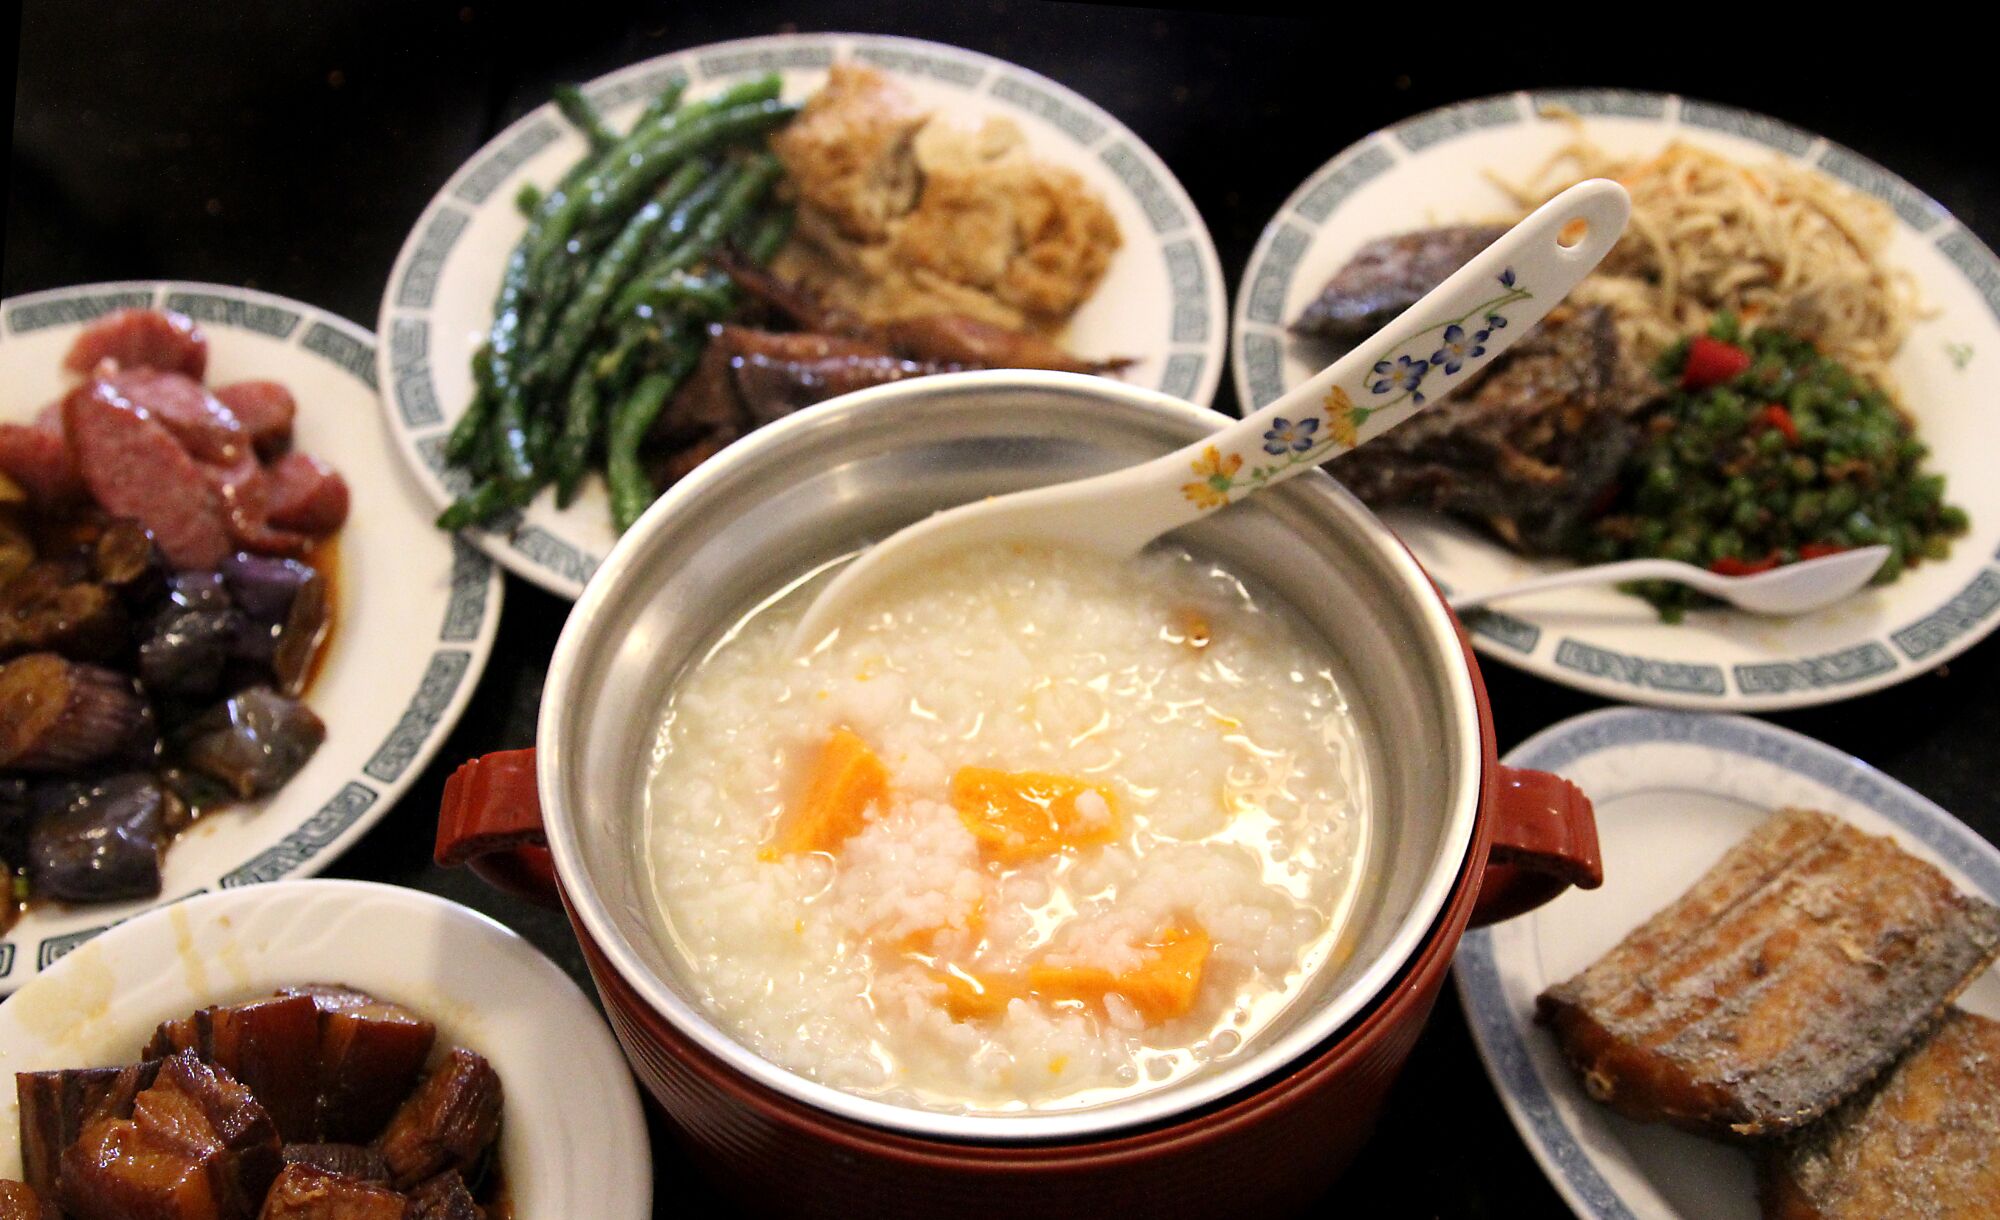 The sweet potato porridge with other specialties from Lu's Garden.